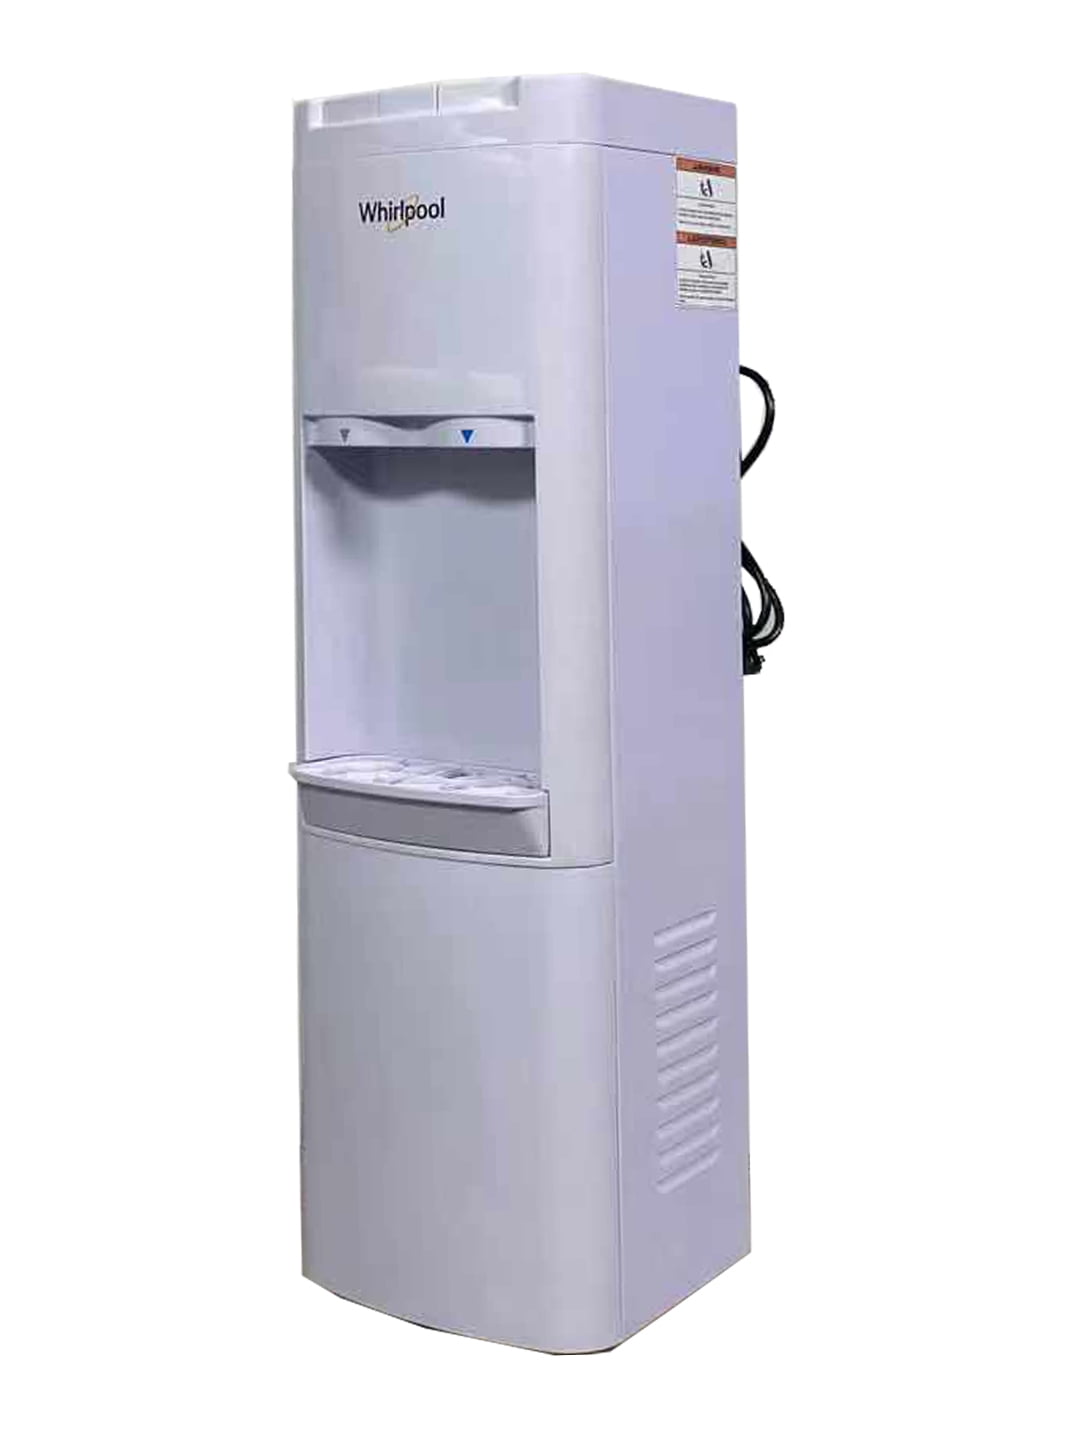 Refrigerator Won't Dispense Water - Top 6 Reasons & Fixes - Kenmore,  Whirlpool, Frigidaire, GE &more - YouTube